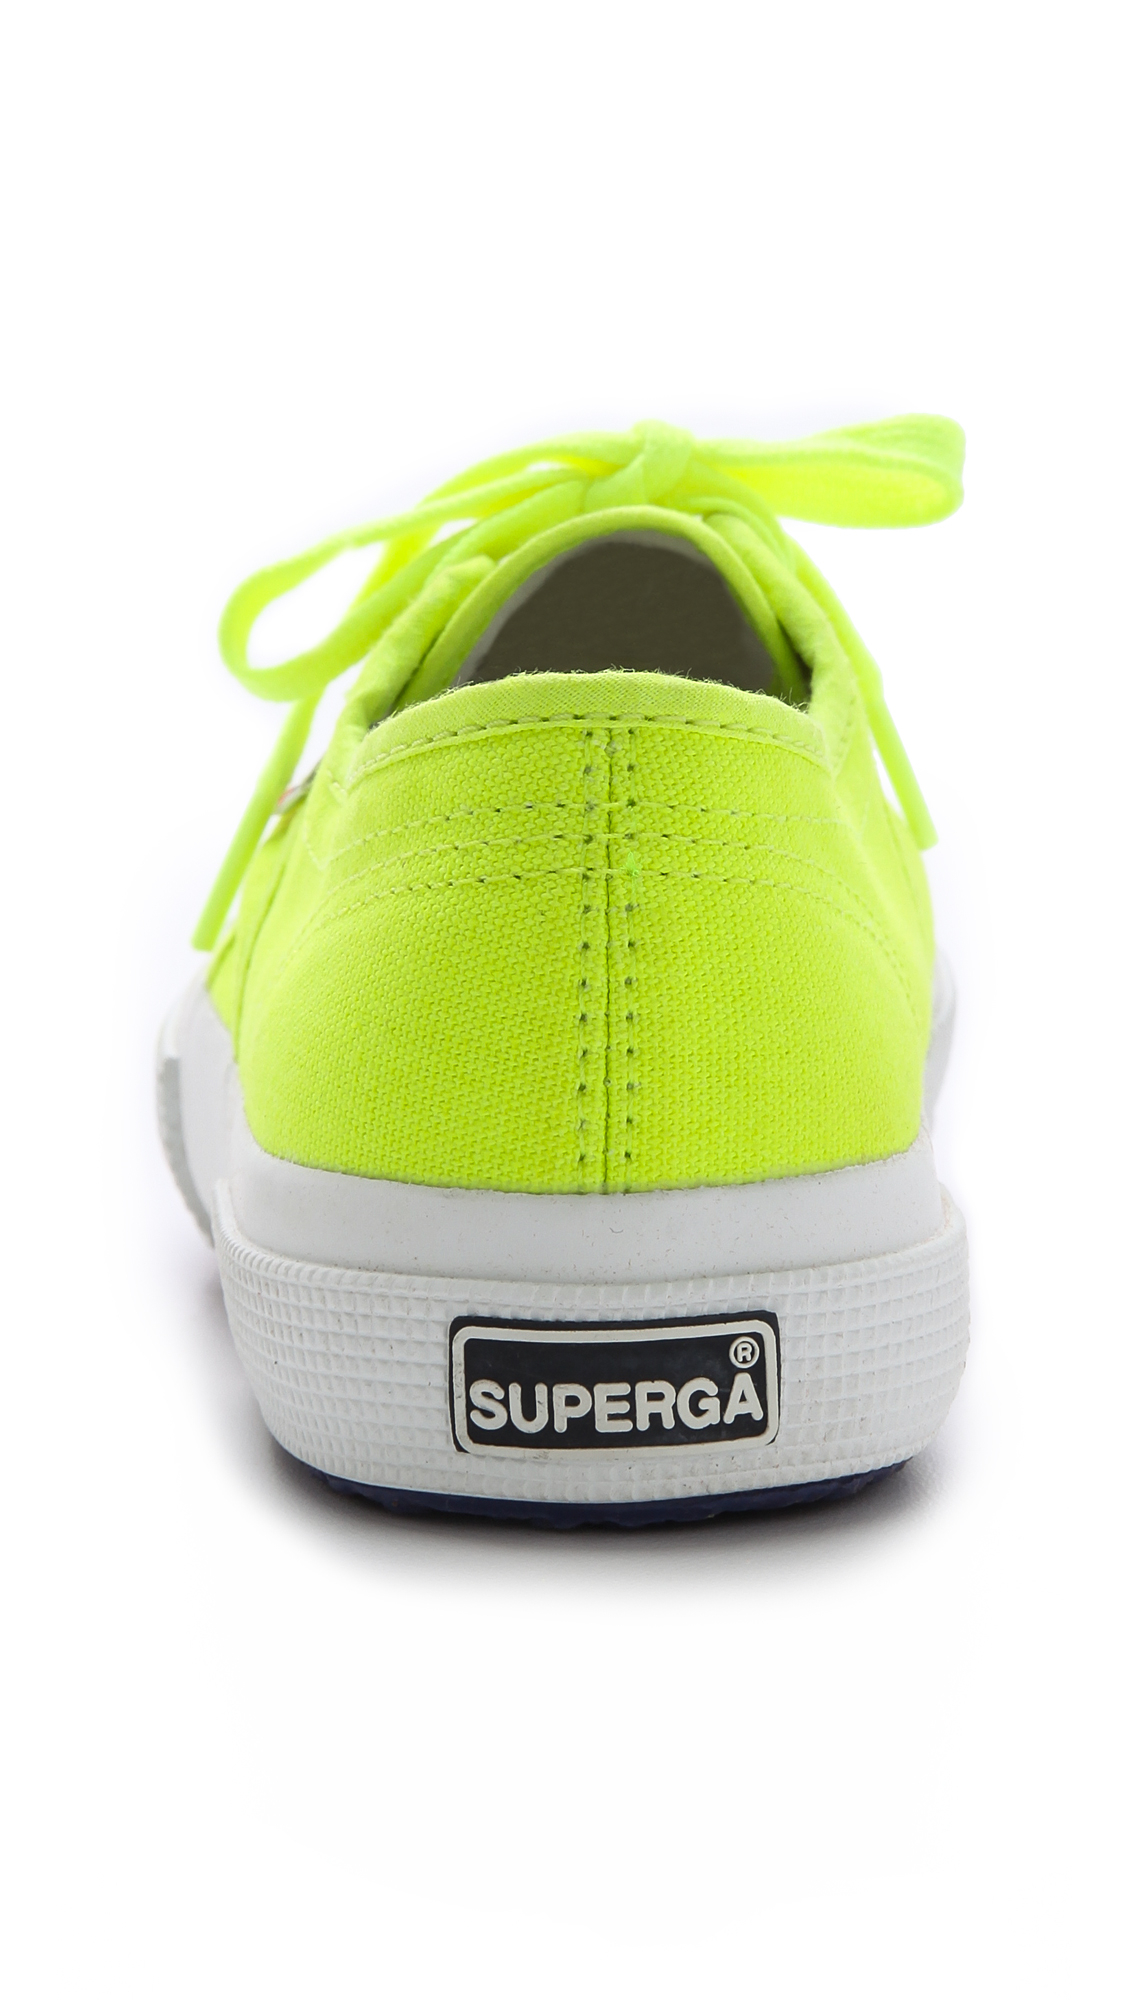 Superga Cotu Fluoro Sneakers - Yellow Neon | Lyst